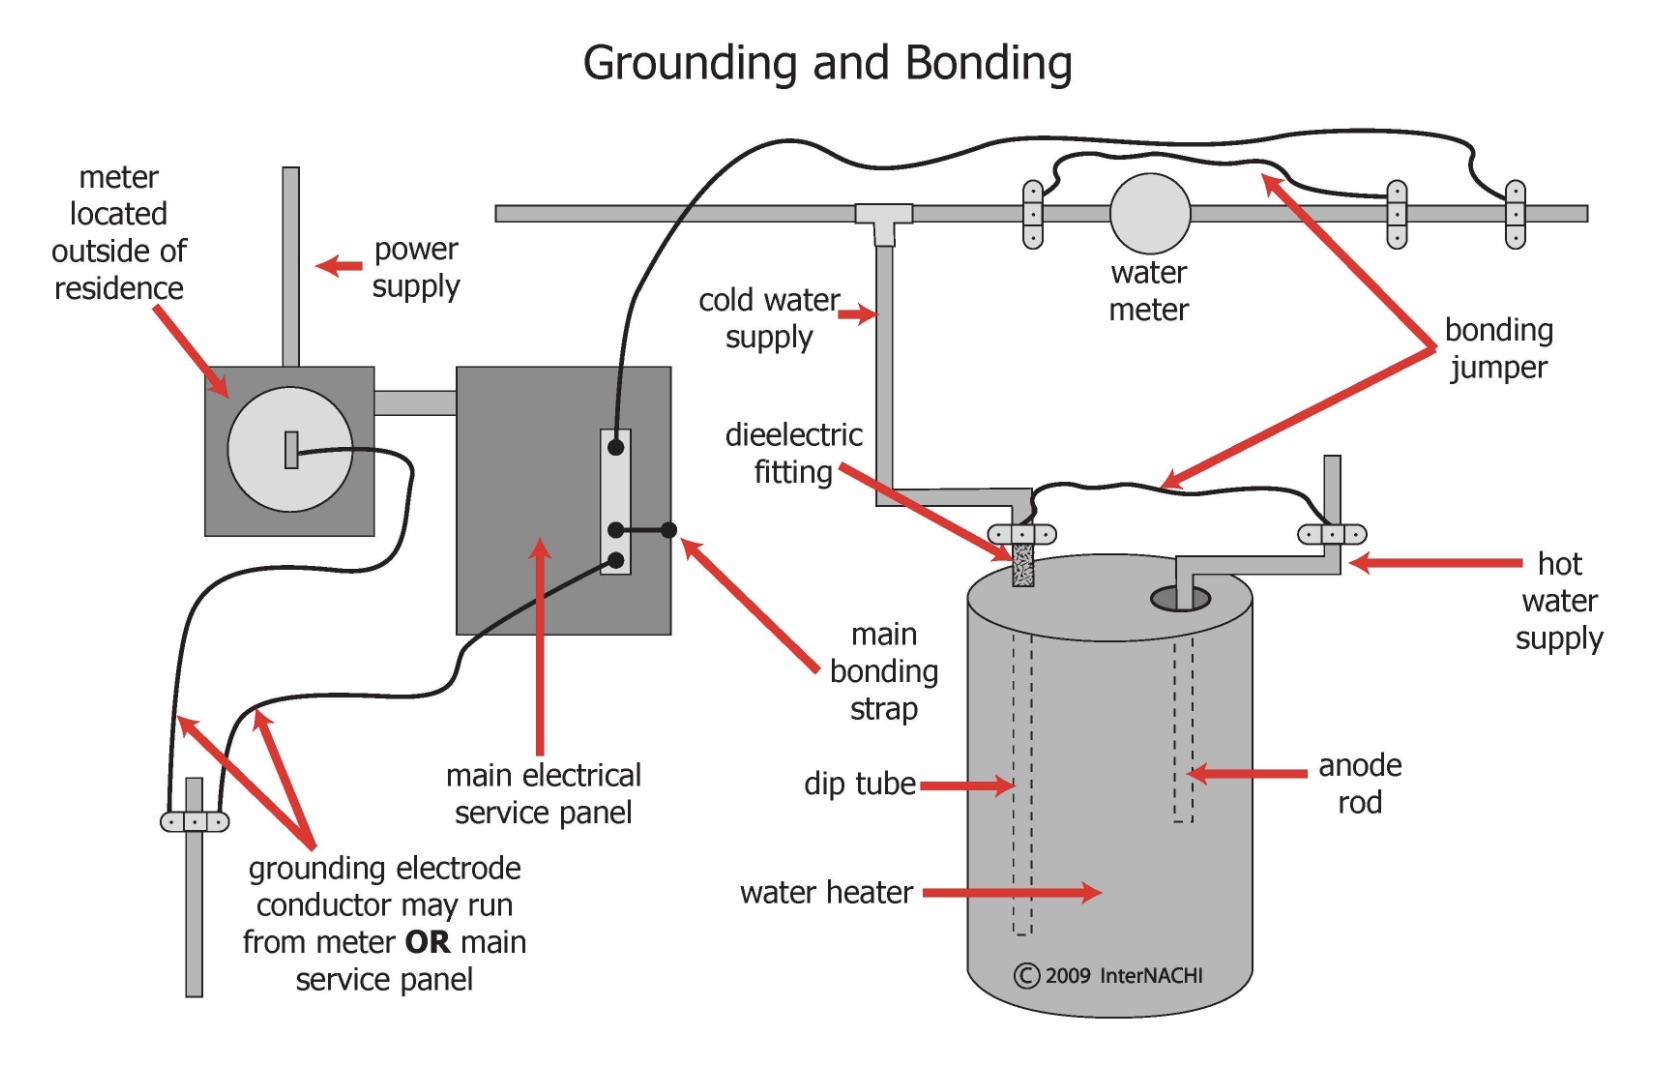 Grounding and Bonding Diagram